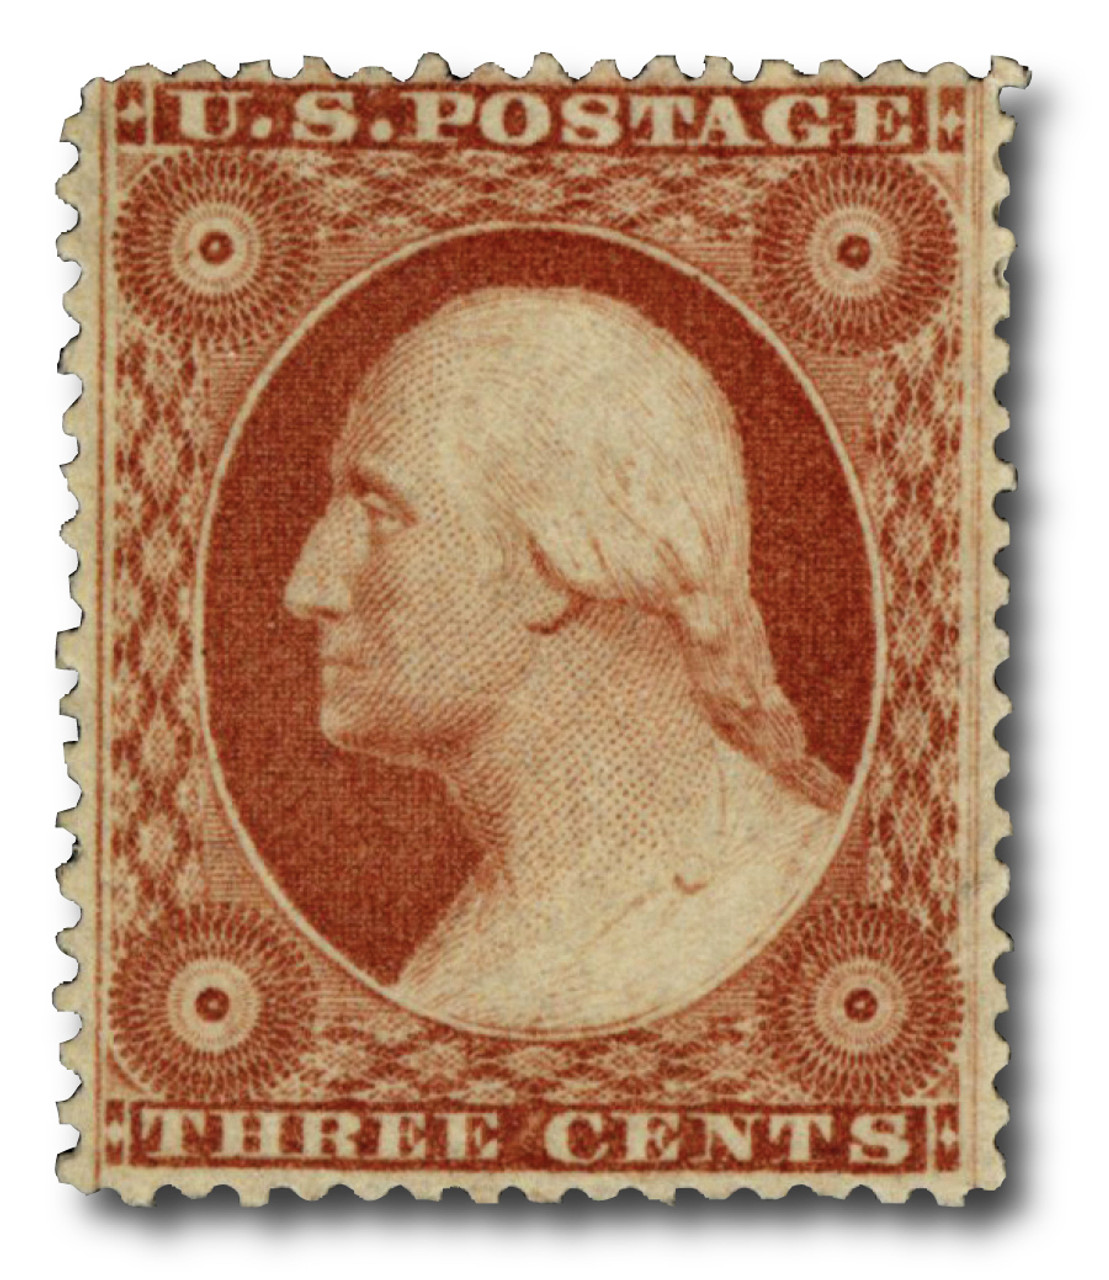 File:US stamp 1870 3c Washington.jpg - Wikimedia Commons